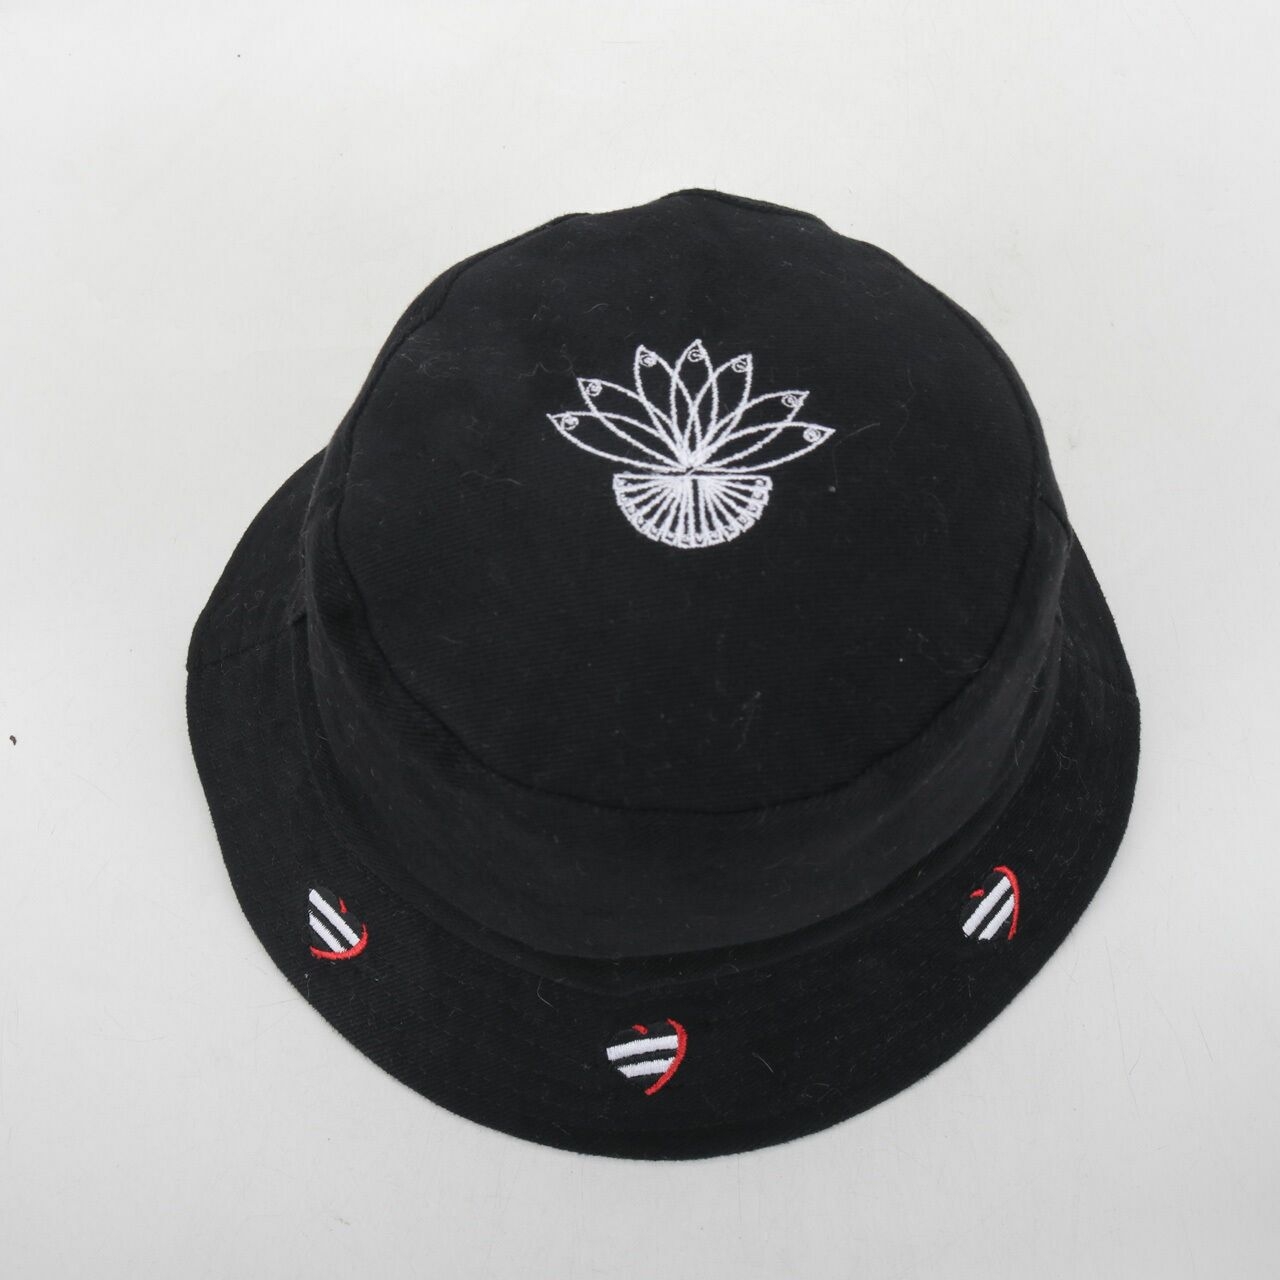 Sephora x Patrick Owen Black Bucket Hats